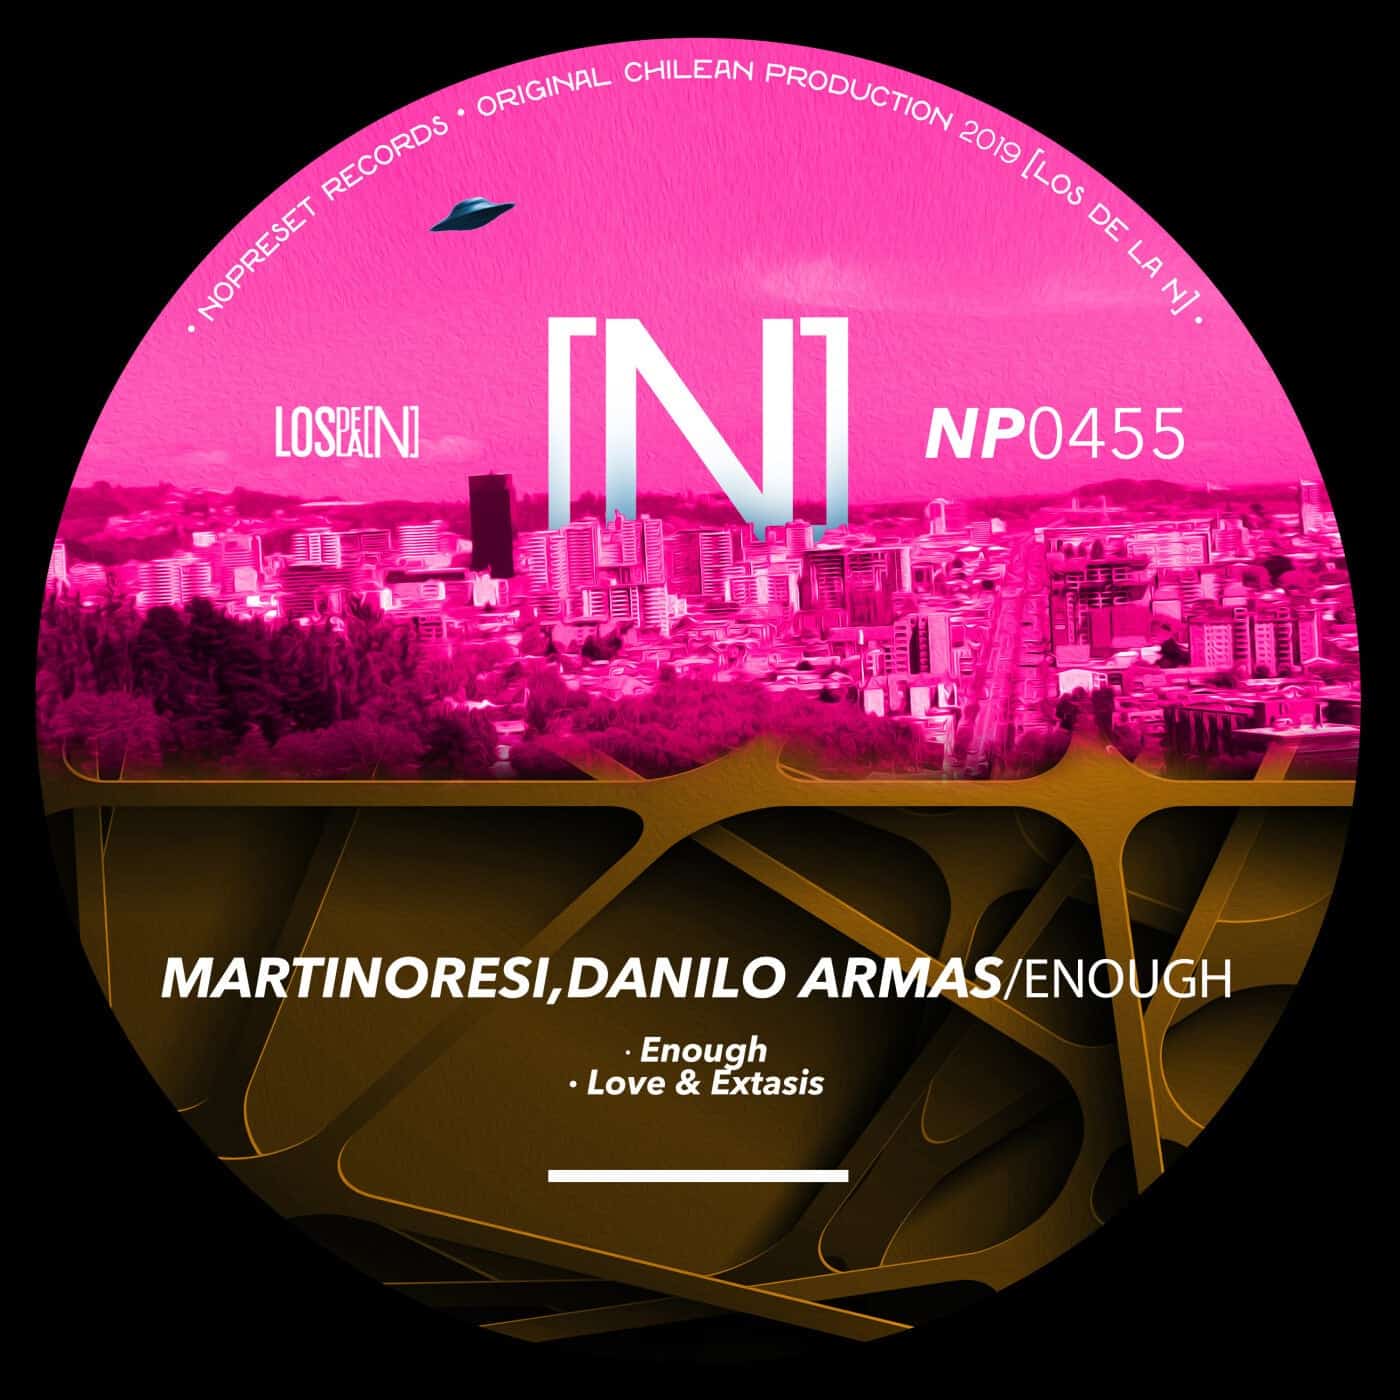 image cover: MartinoResi, Danilo Armas - Enough / NP0455